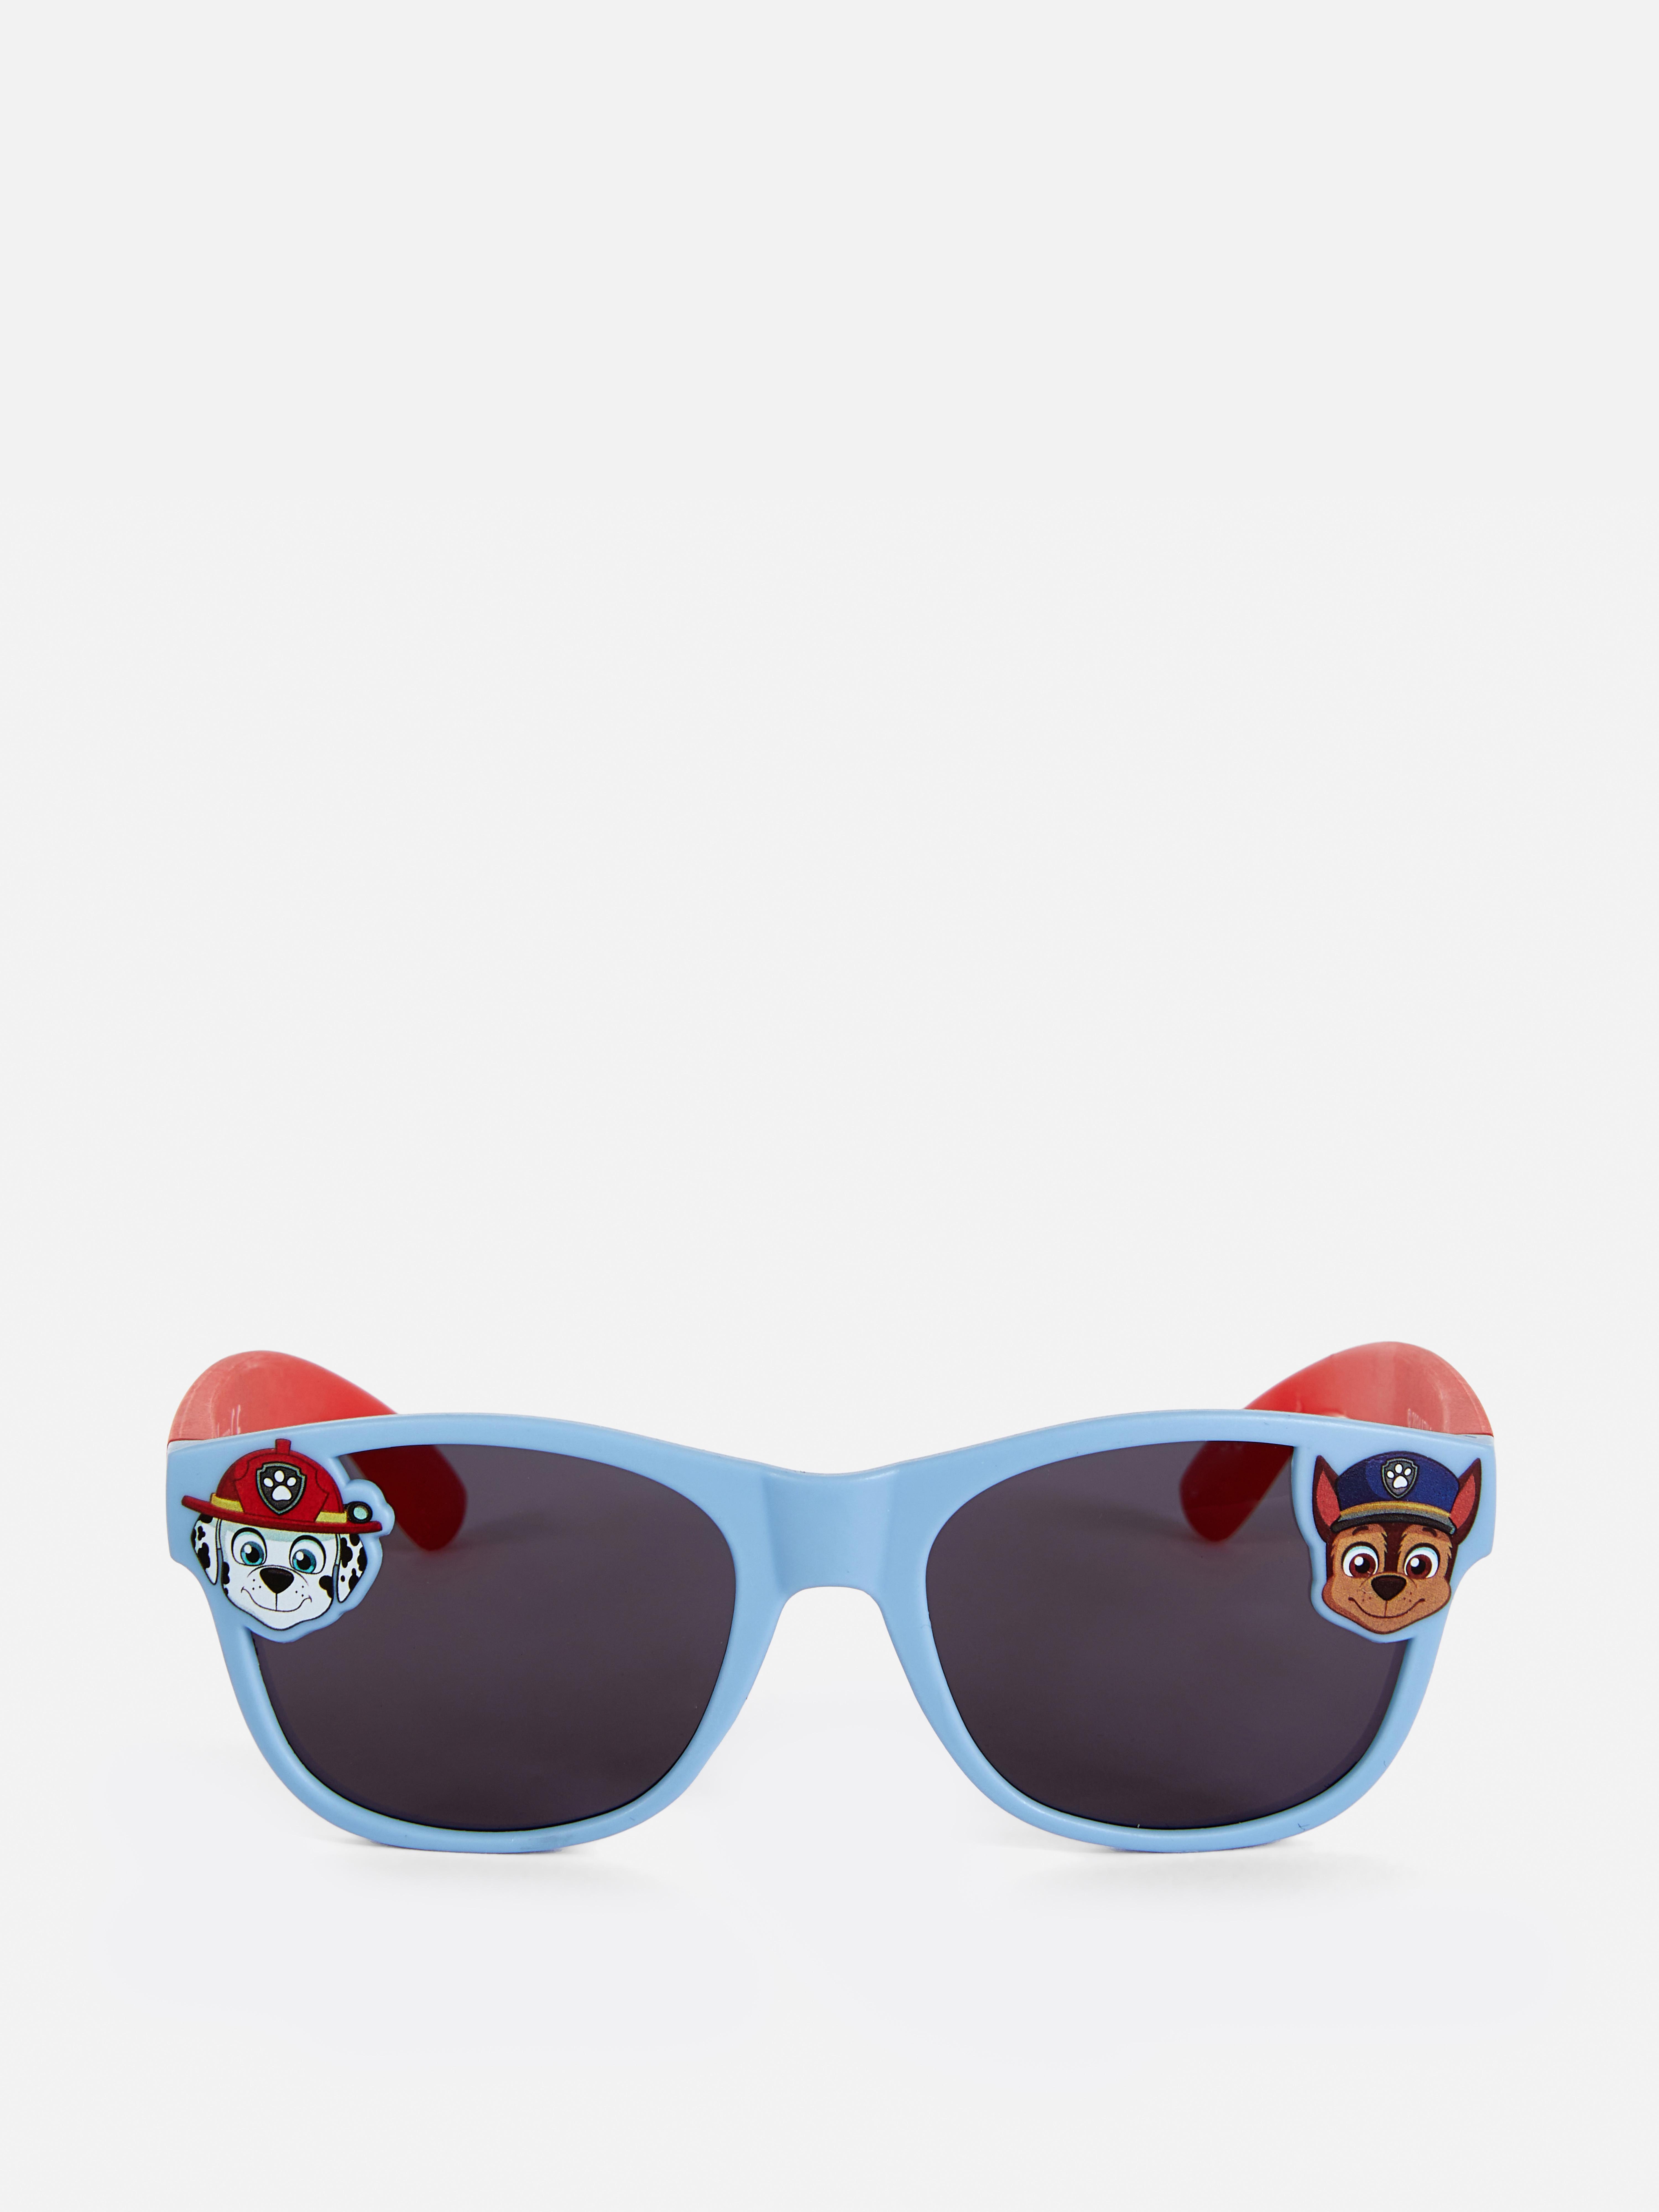 PAW Patrol Sunglasses